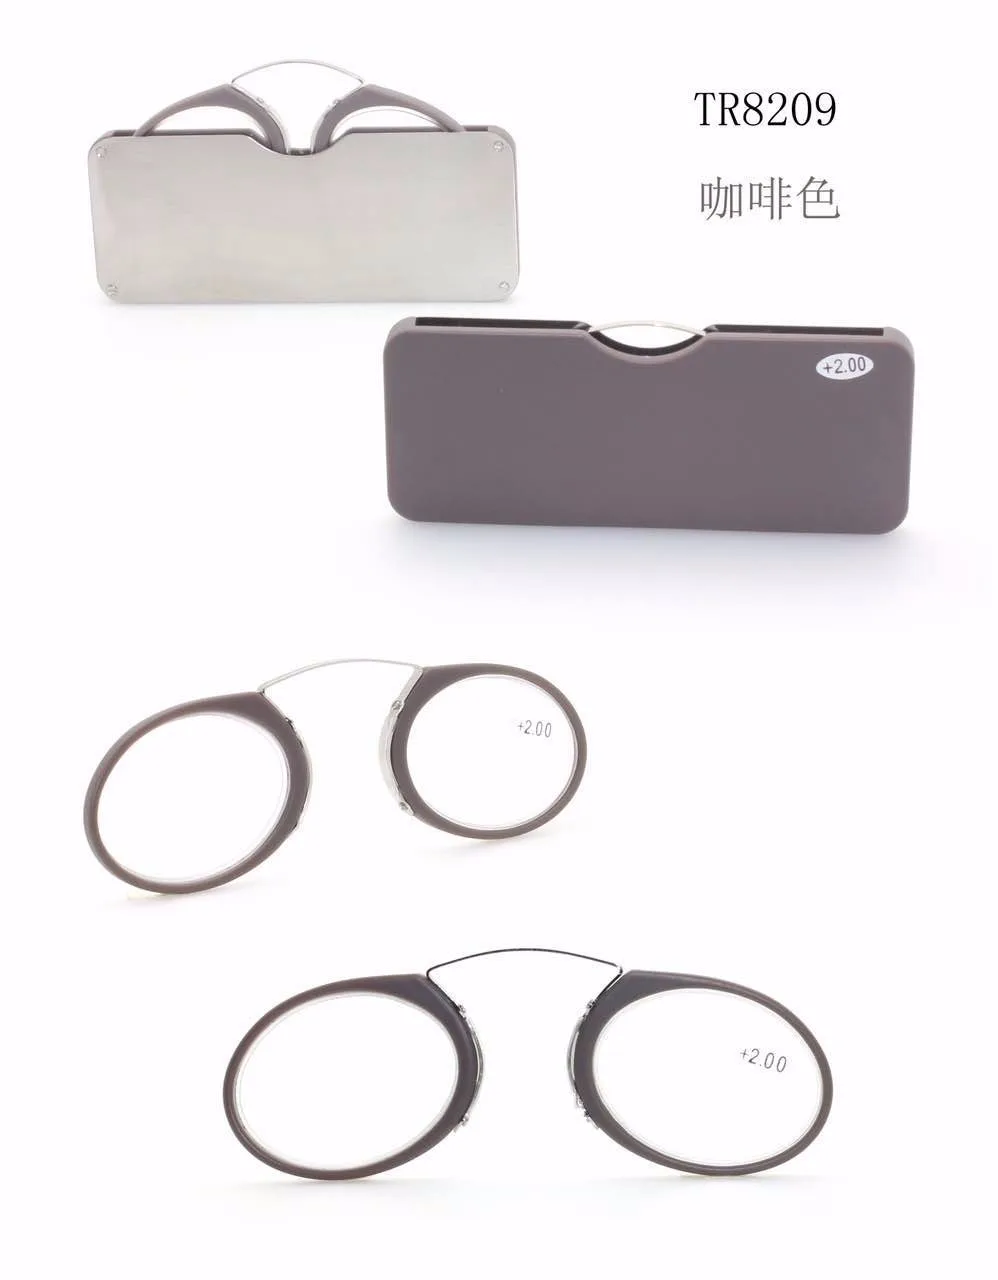 EUGENIA fashional designed mini wallet reading glasses without arm